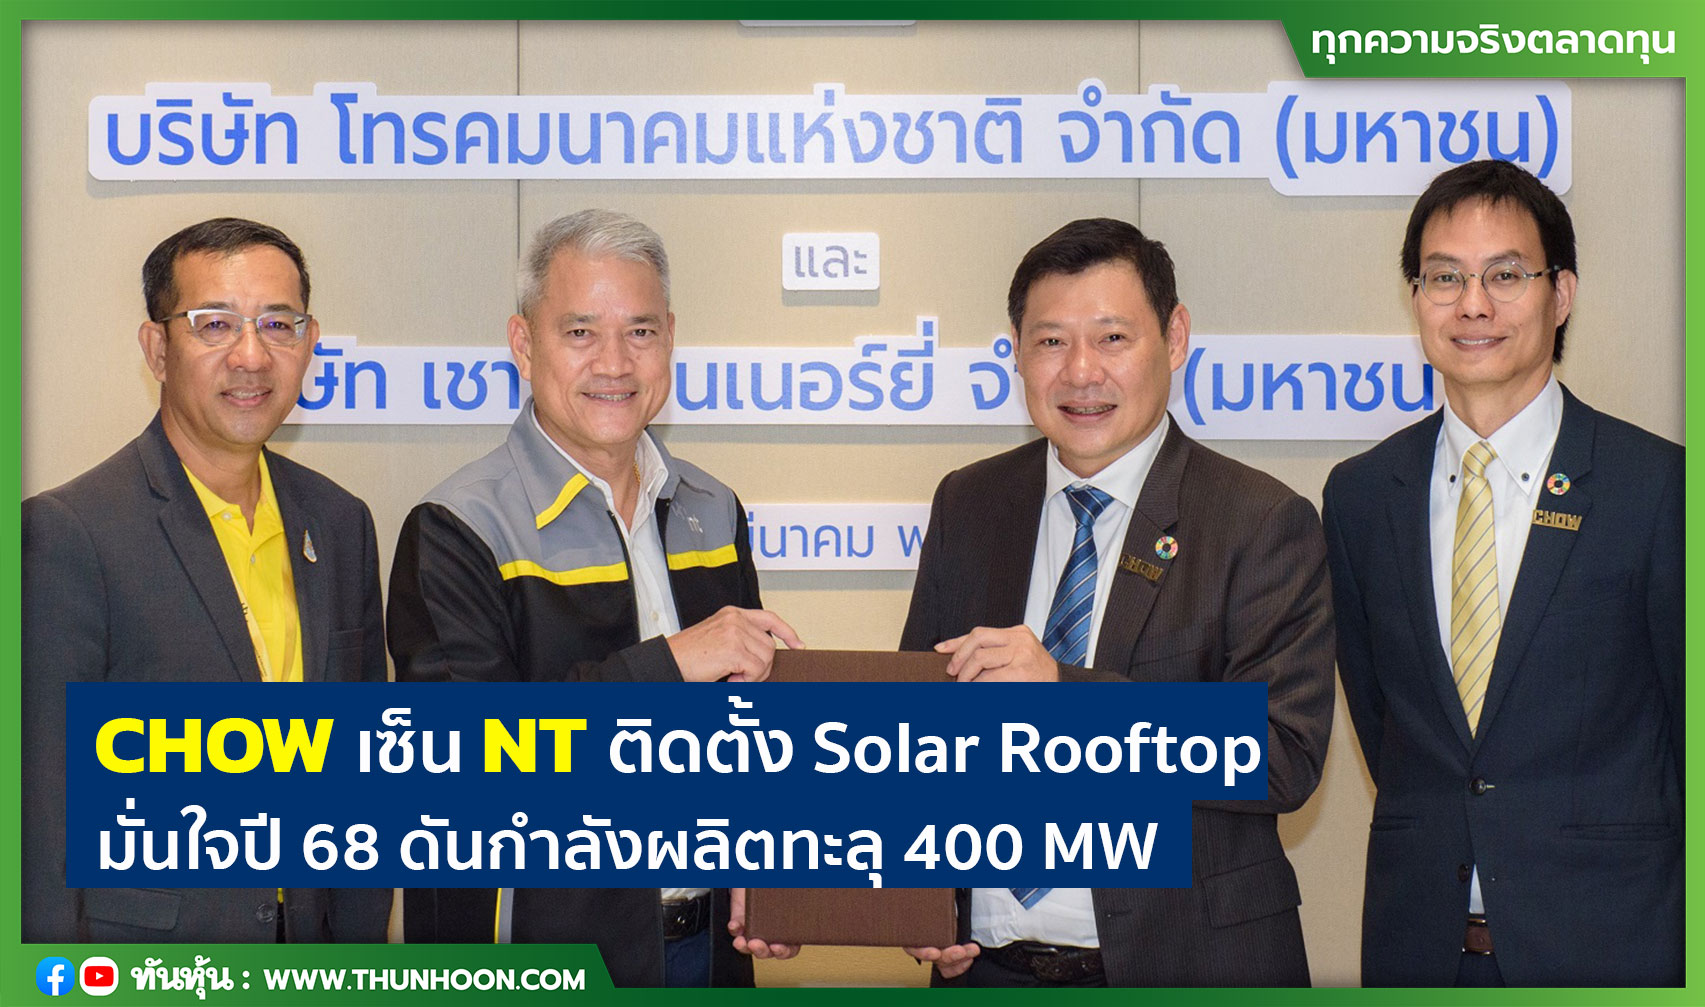 CHOW เซ็น NT ติดตั้ง Solar Rooftop มั่นใจปี 68 ดันกำลังผลิตทะลุ 400 MW